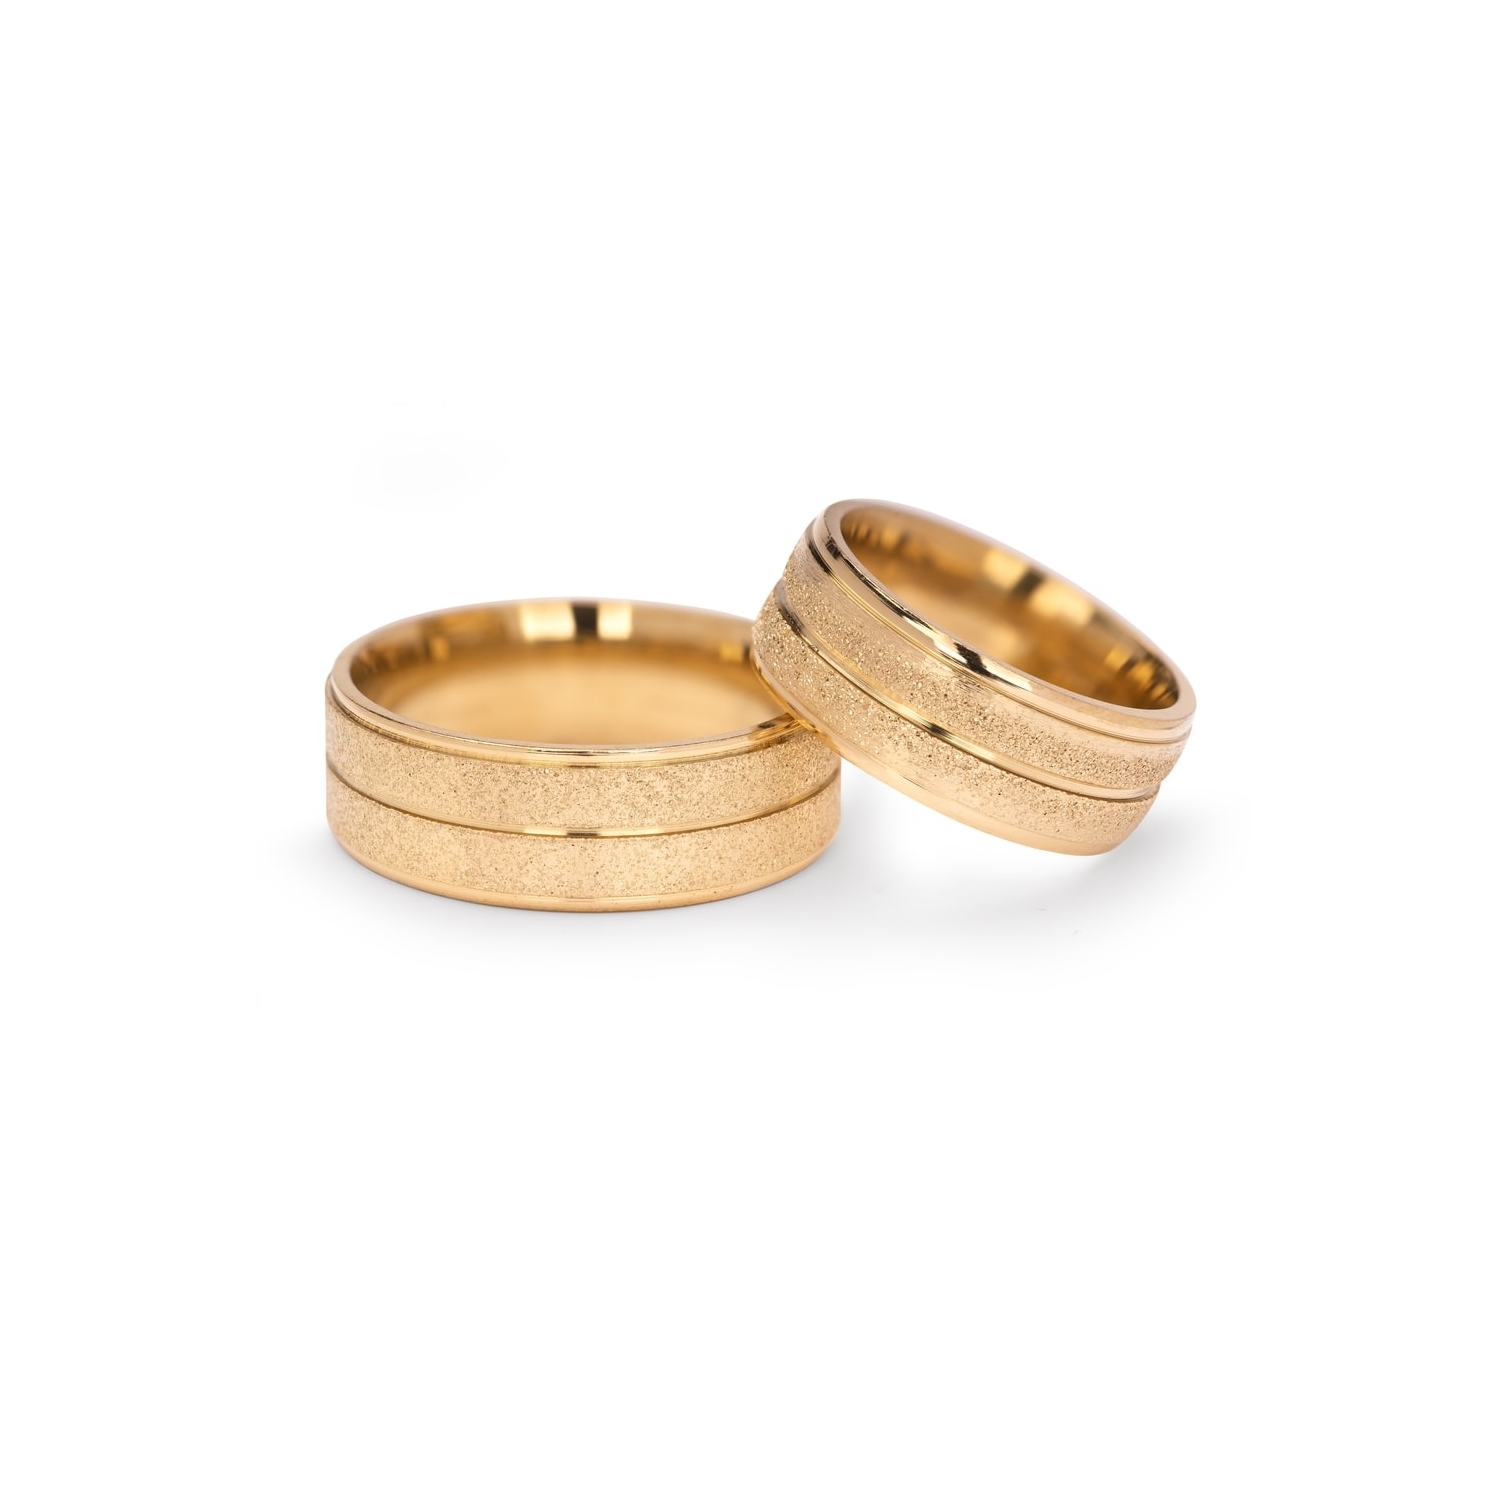 Gold wedding rings "VKA 308"